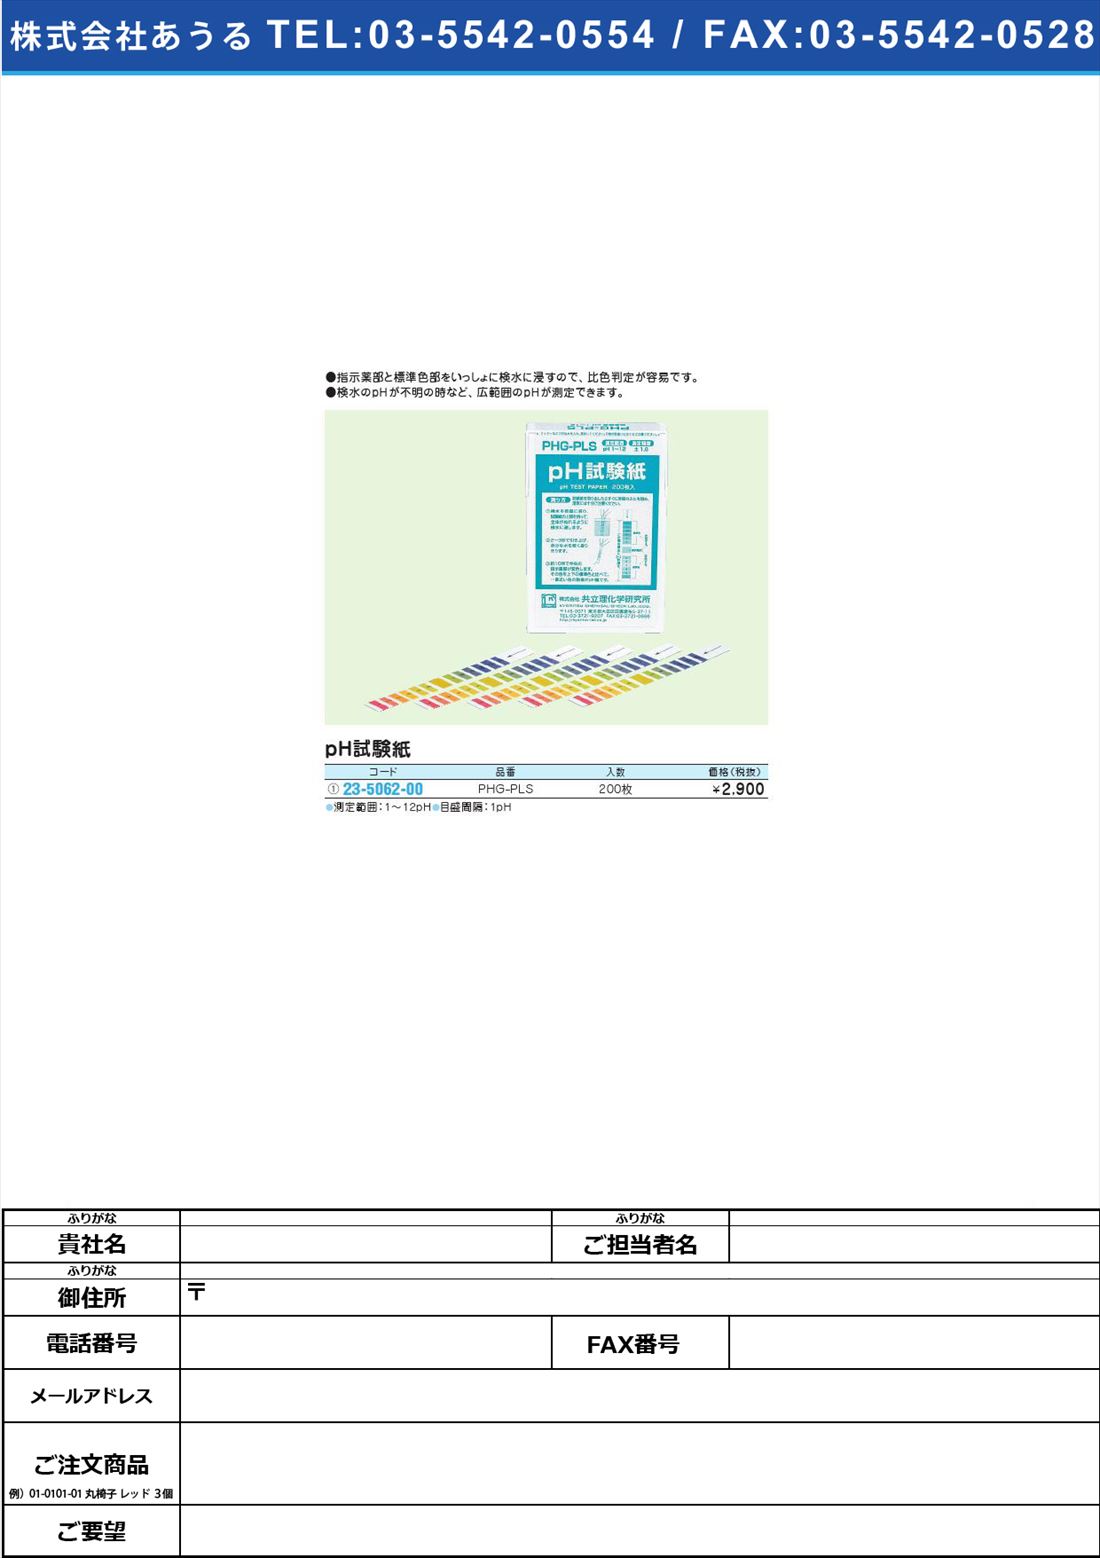 (23-5062-00)ｐH試験紙 PHG-PLS(23-5062-00)【1個単位】【2012年カタログ商品】